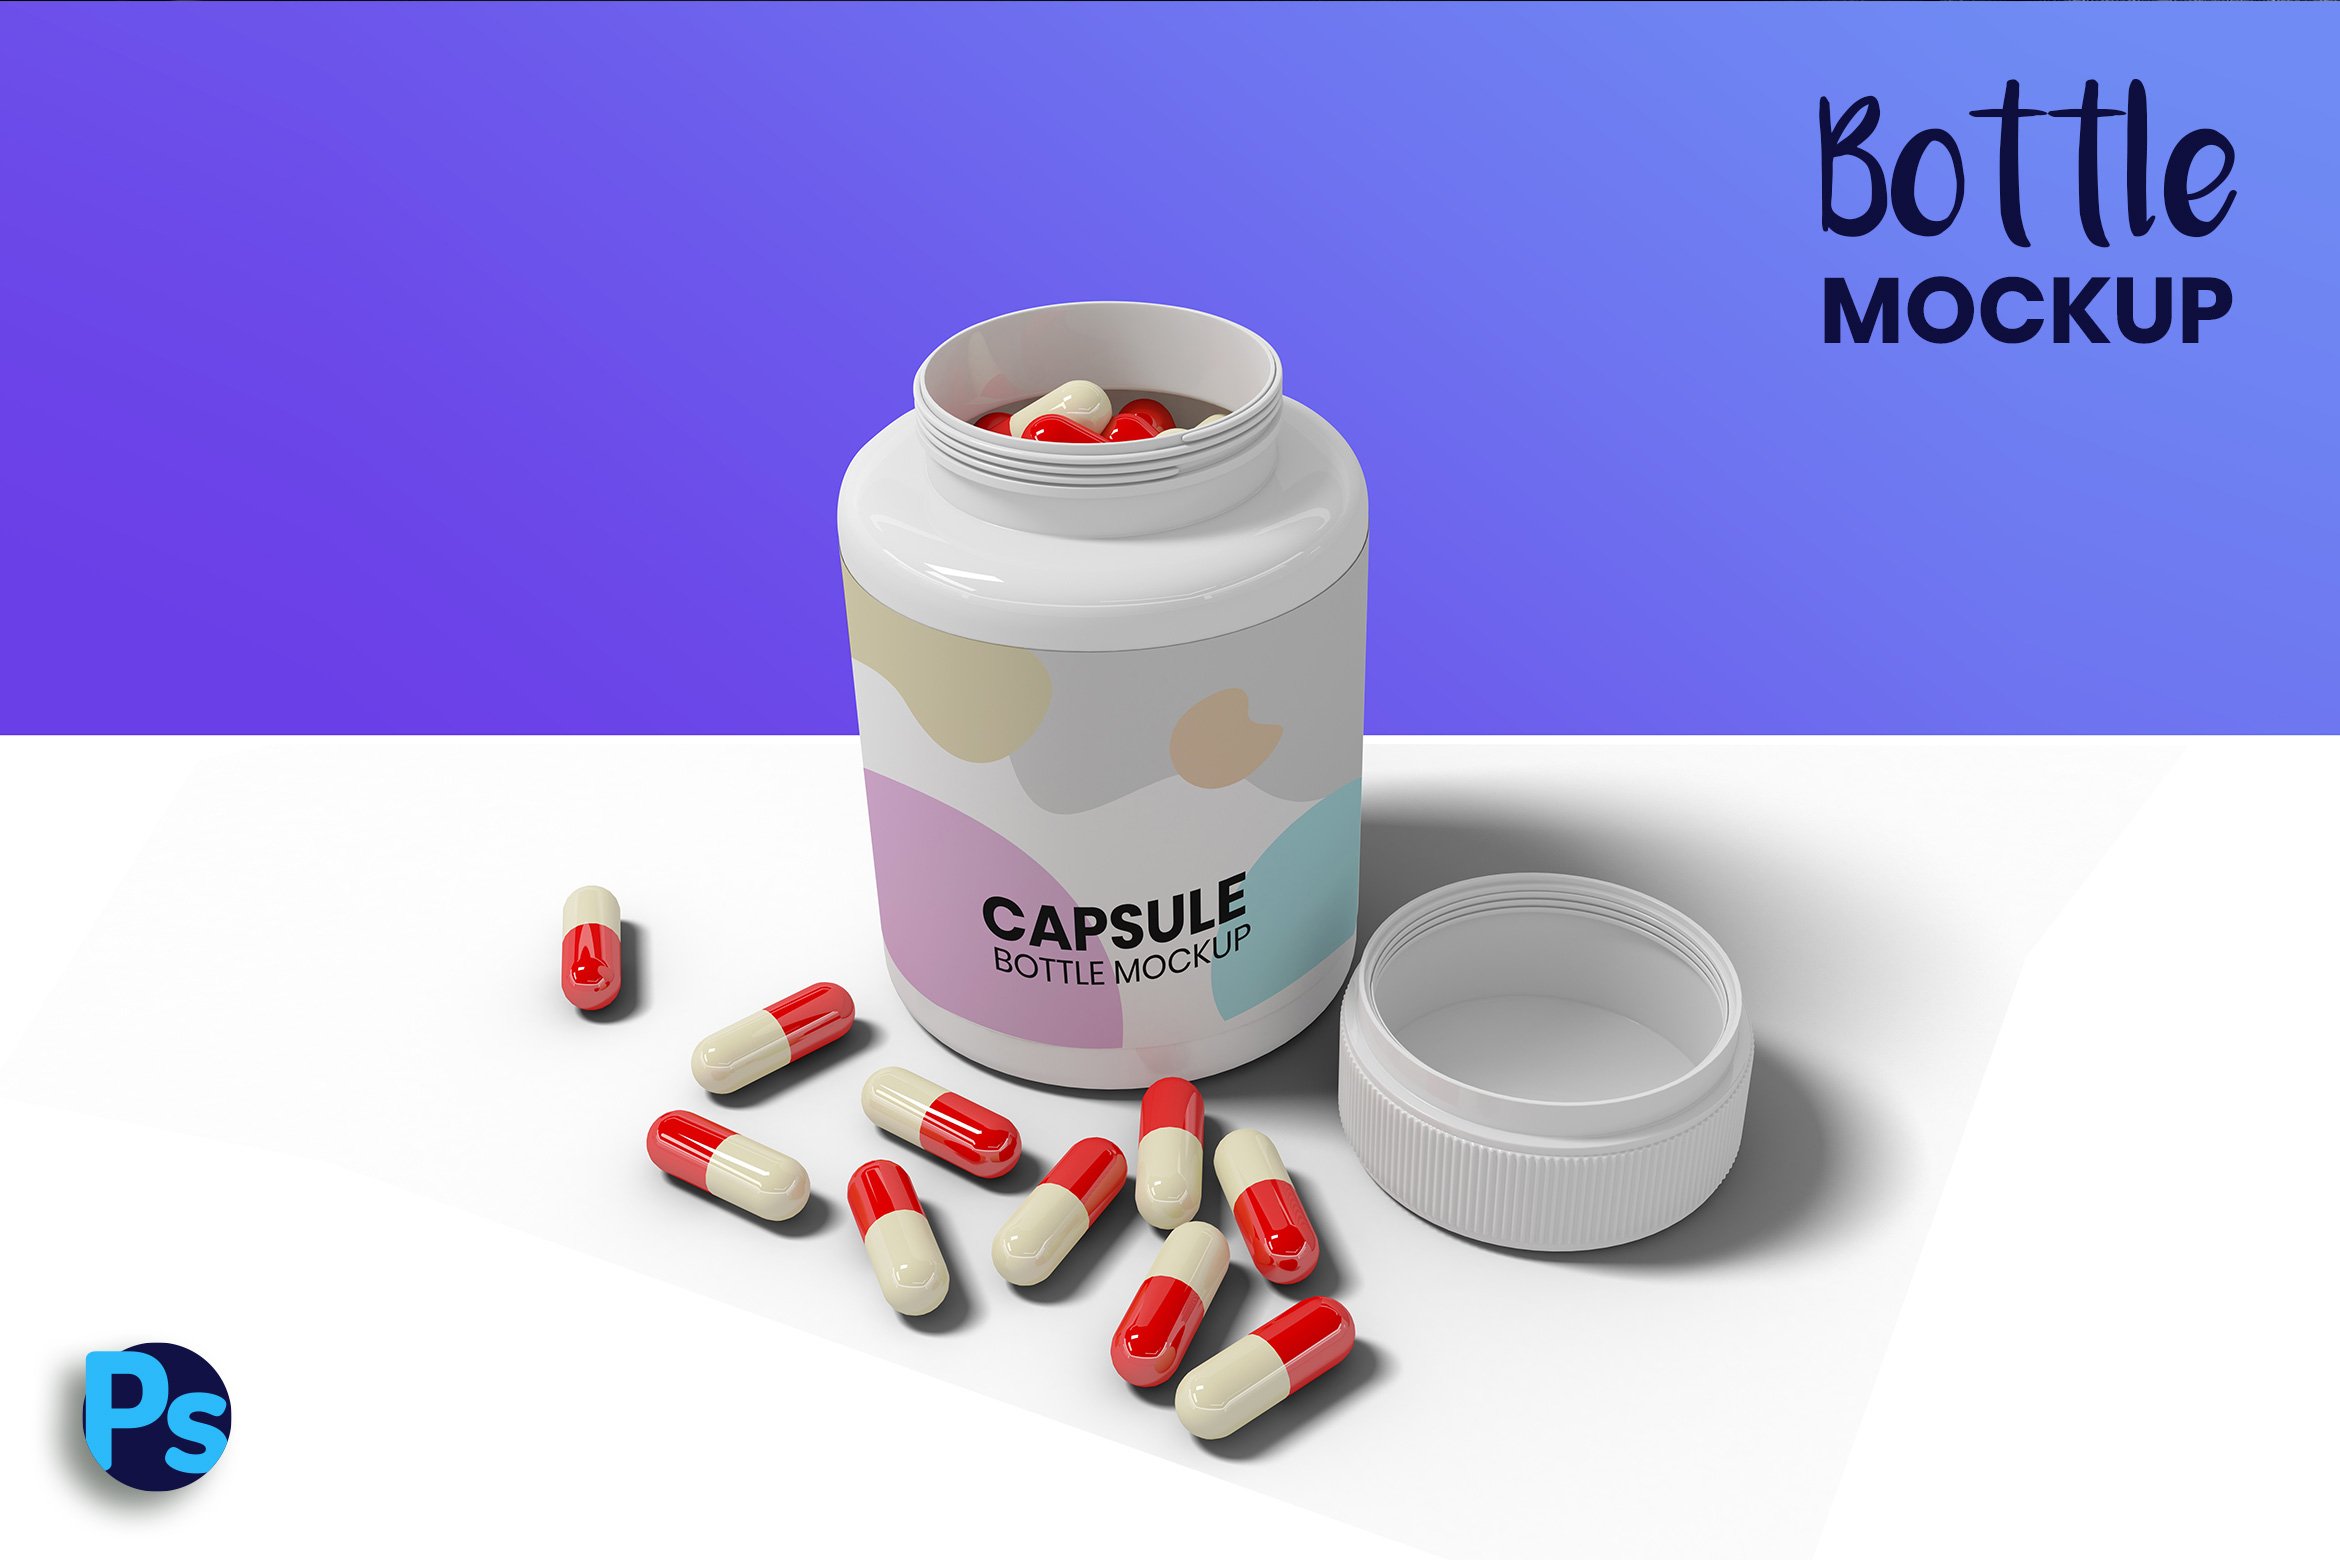 Capsule Bottle Mockup